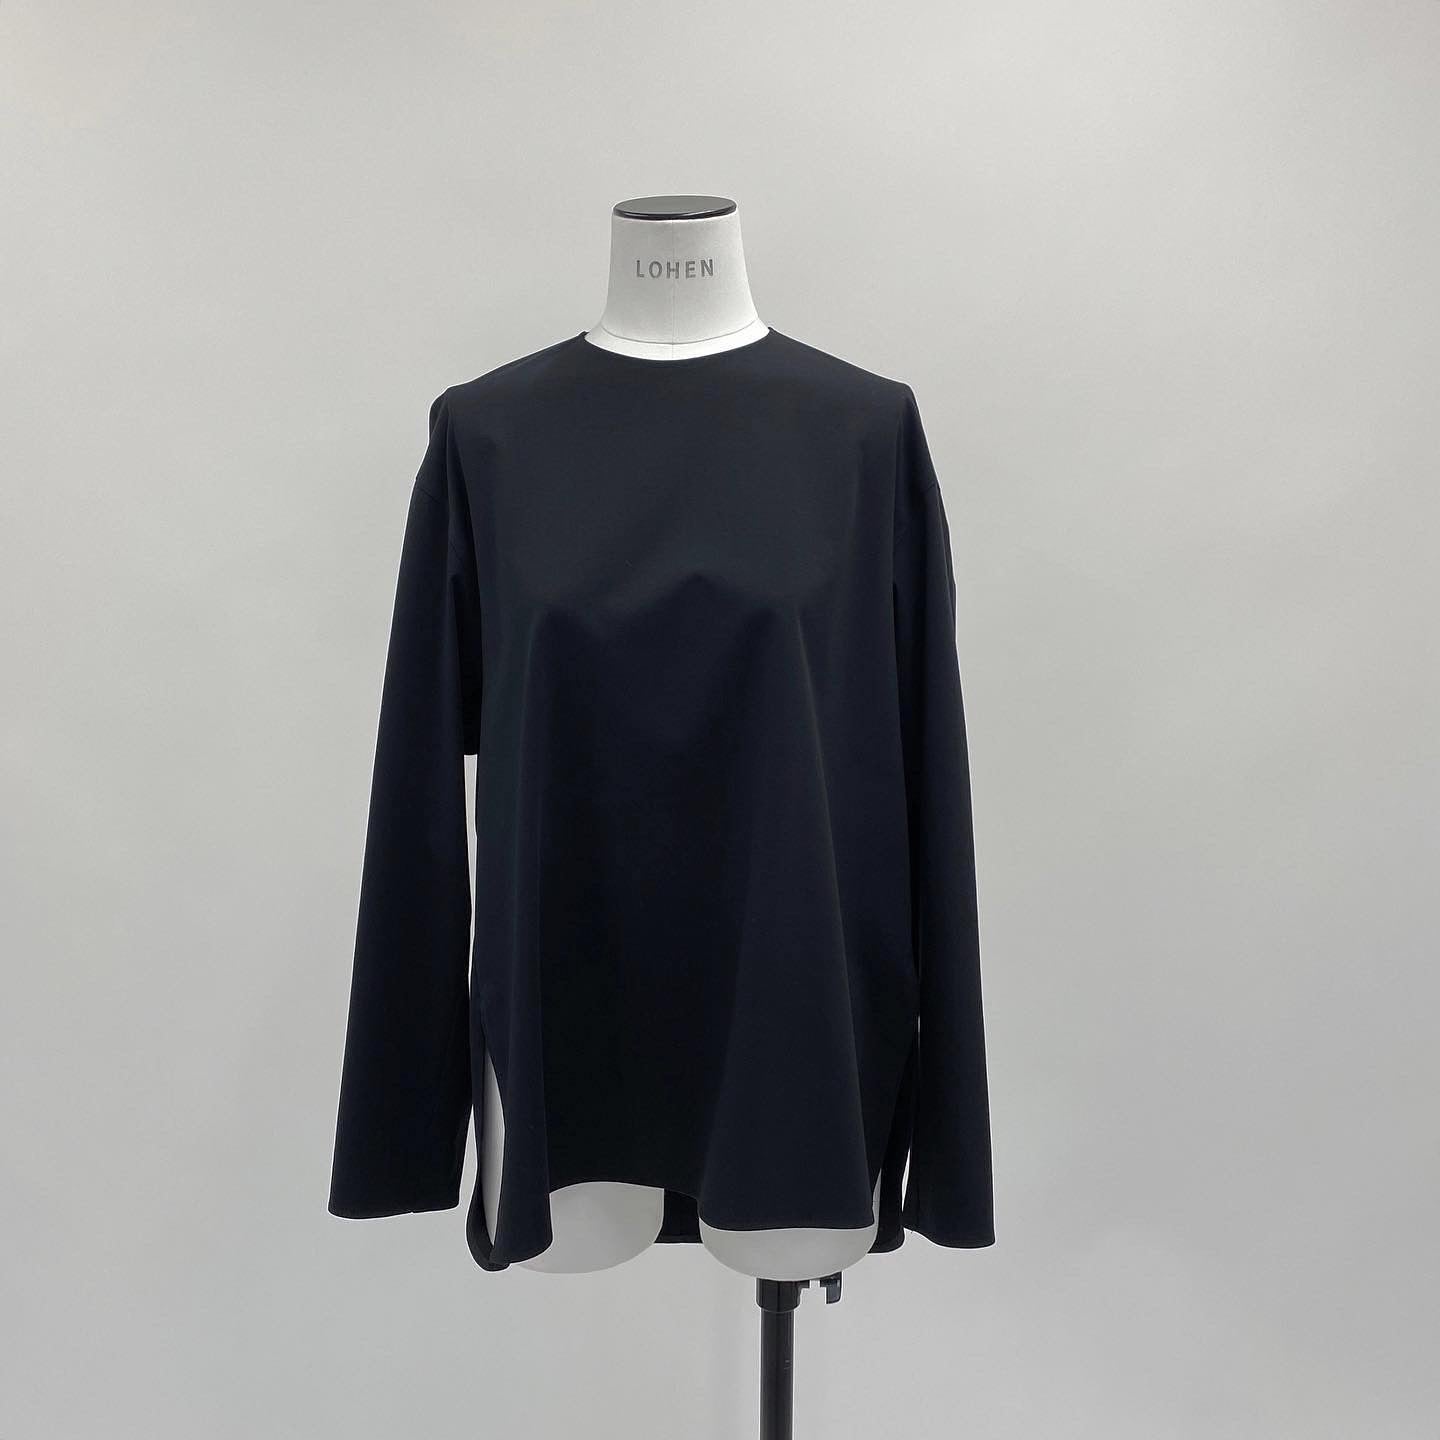 【 lohen 】カーブスリーブロングTシャツ(black)ロンT